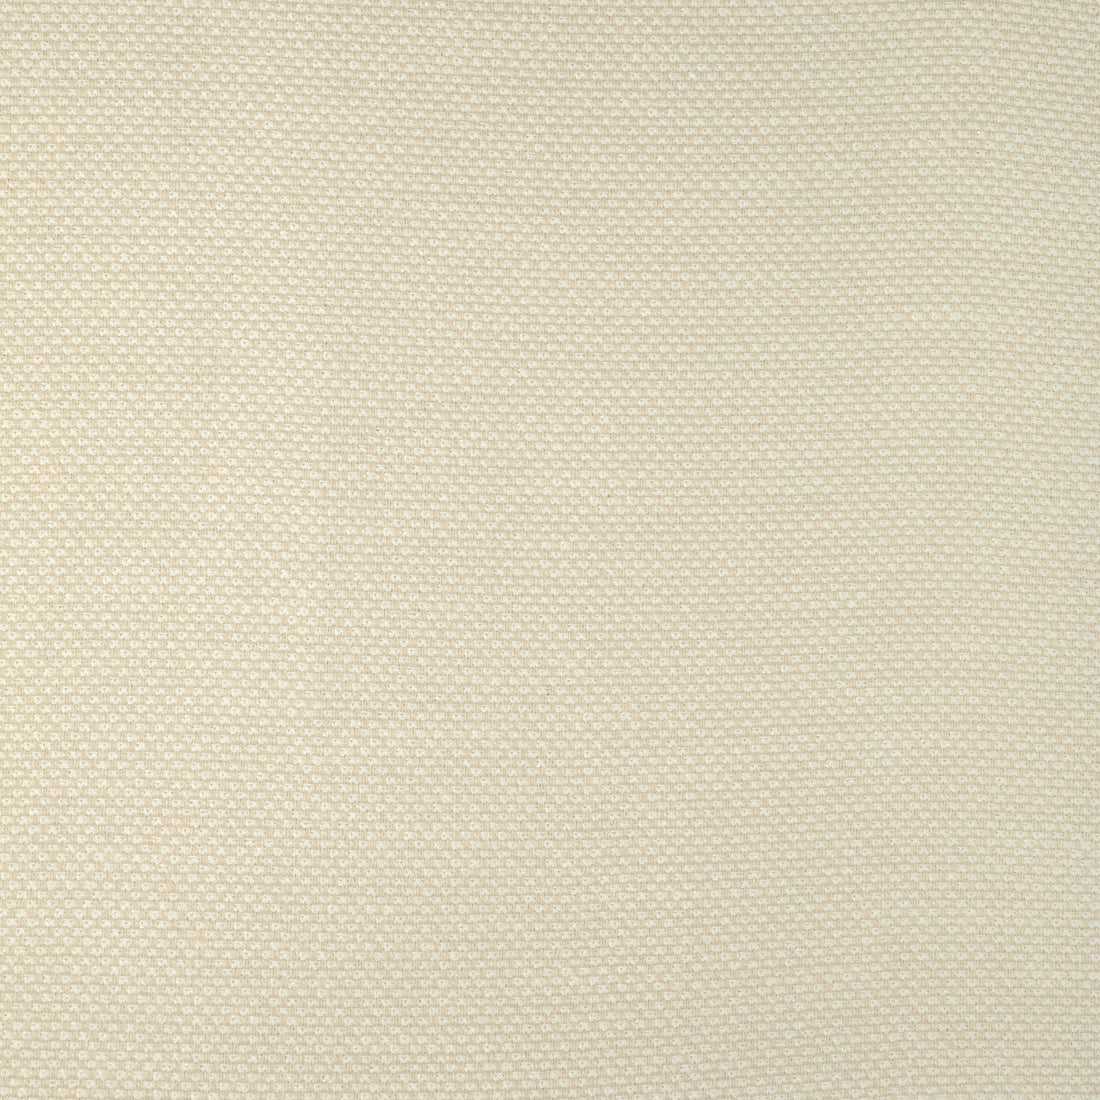 Kravet Smart fabric in 36999-1 color - pattern 36999.1.0 - by Kravet Smart in the Pavilion collection